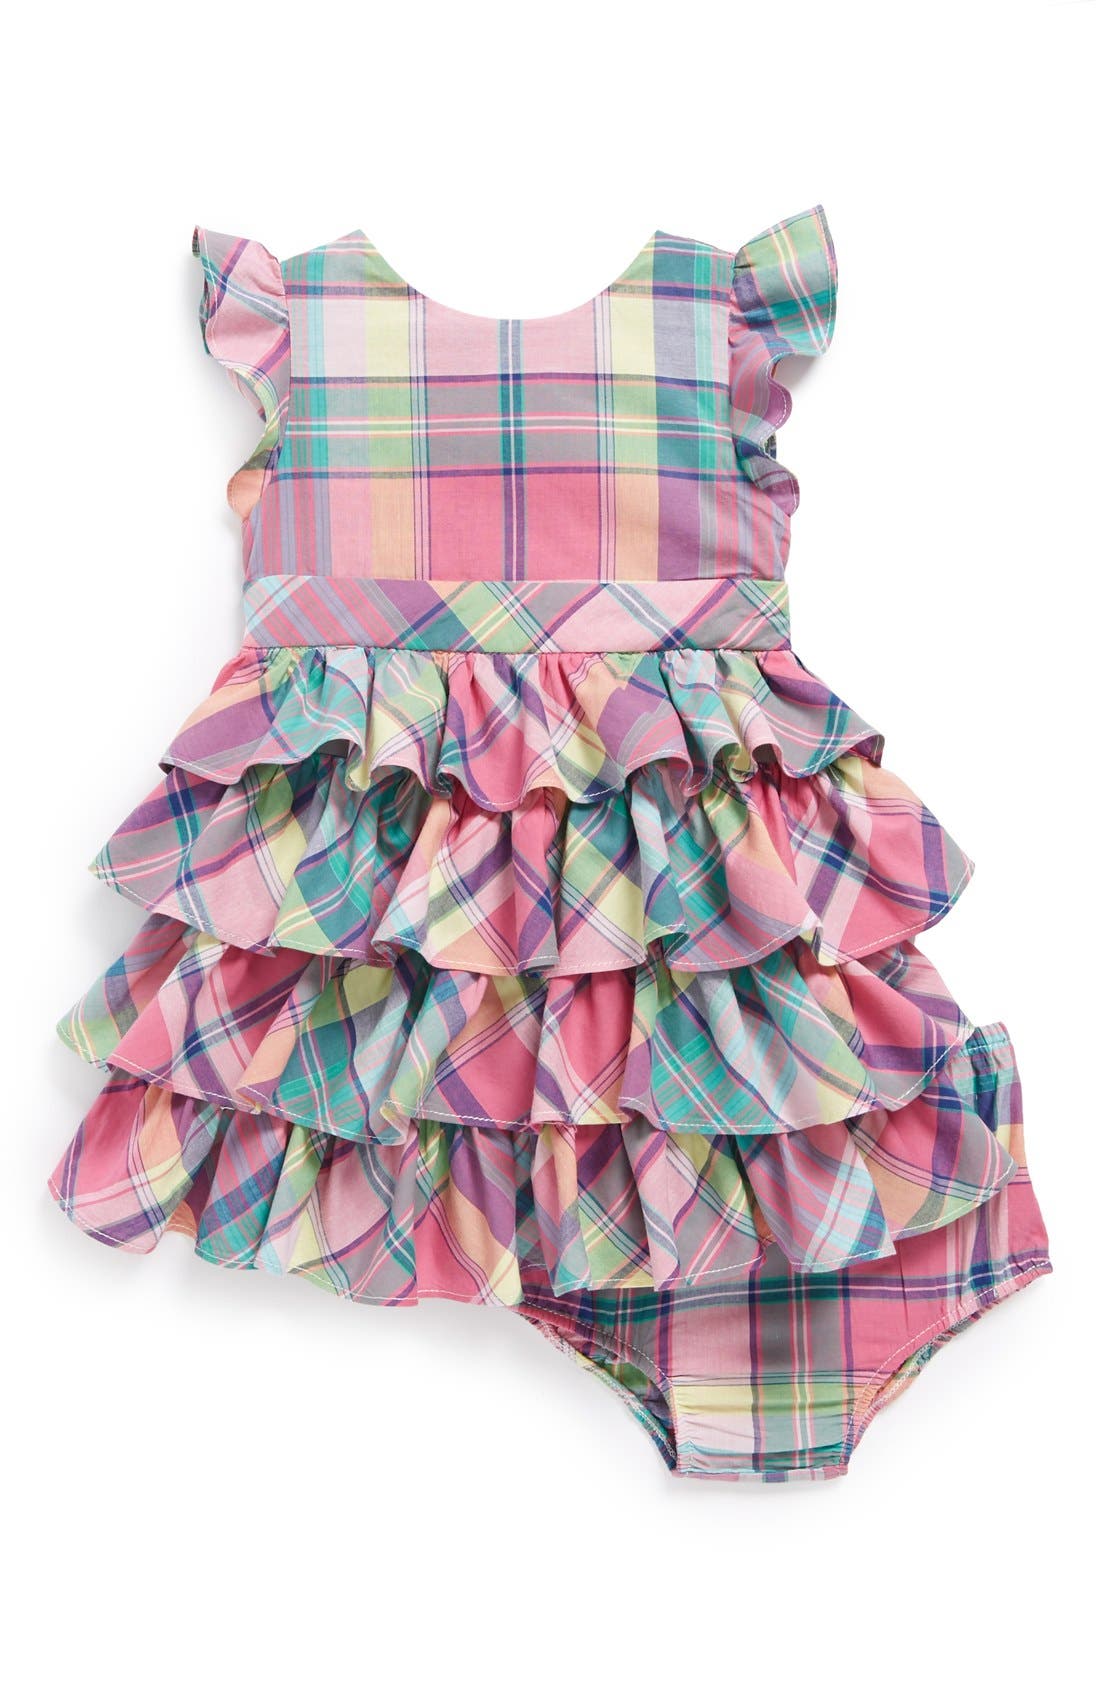 ralph lauren plaid baby dress